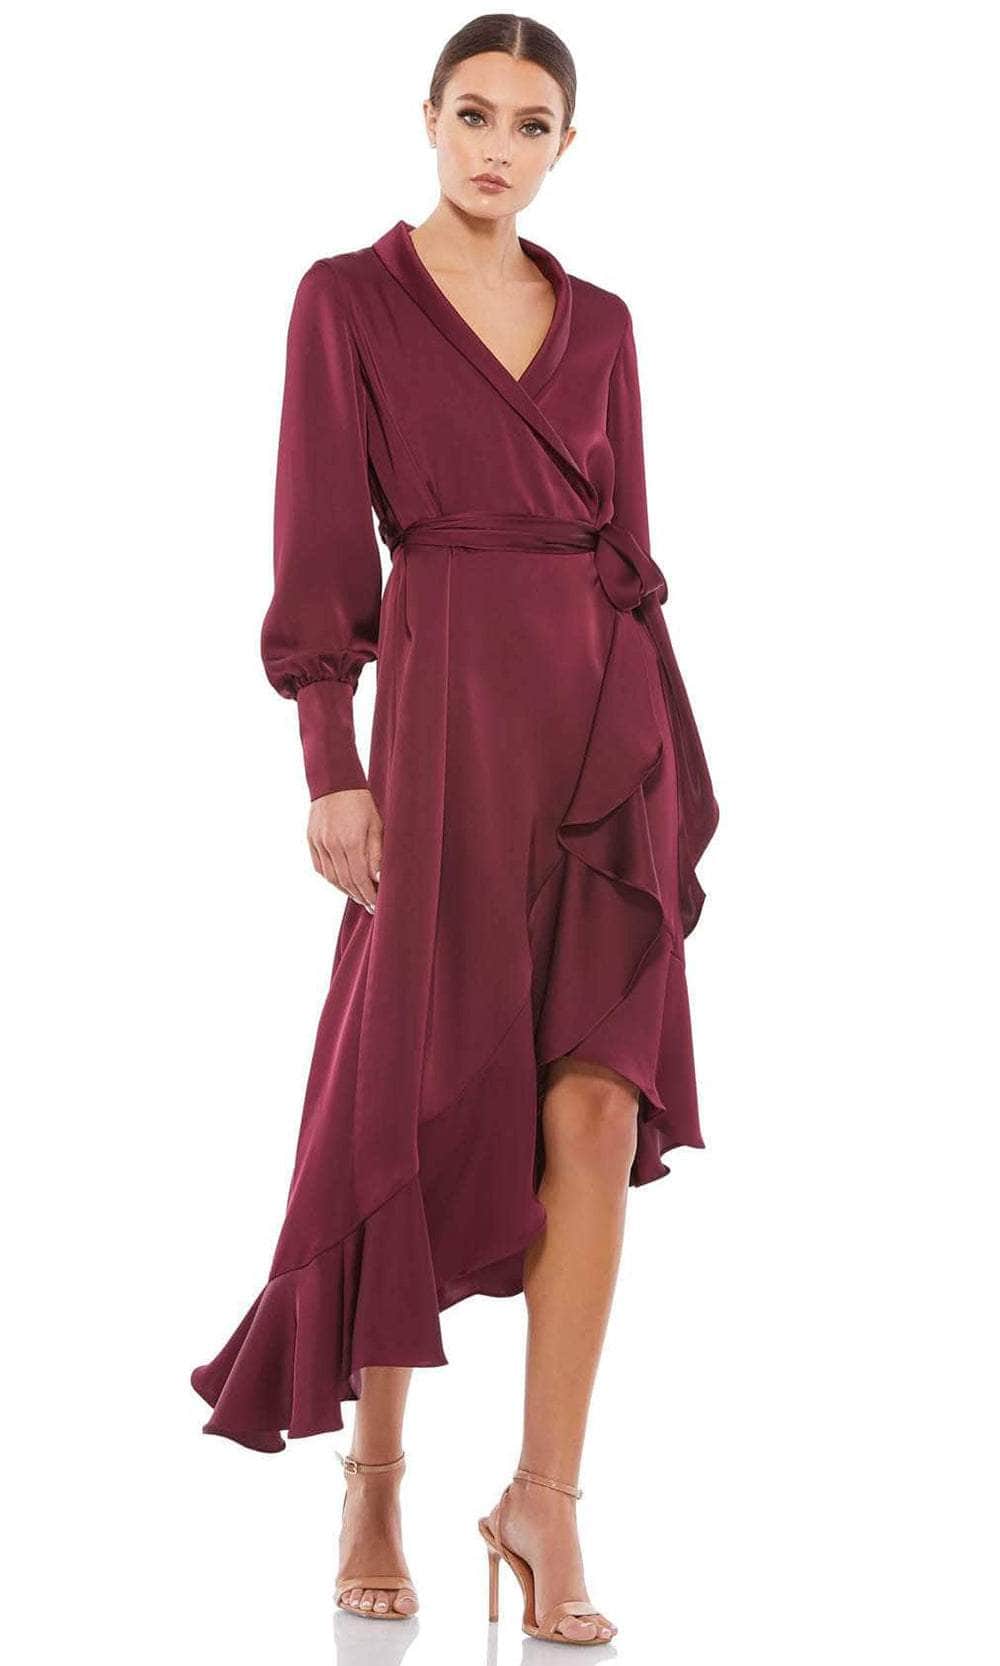 Ieena Duggal 12506 - Ruffle High Low Evening Dress Special Occasion Dress 0 / Wine